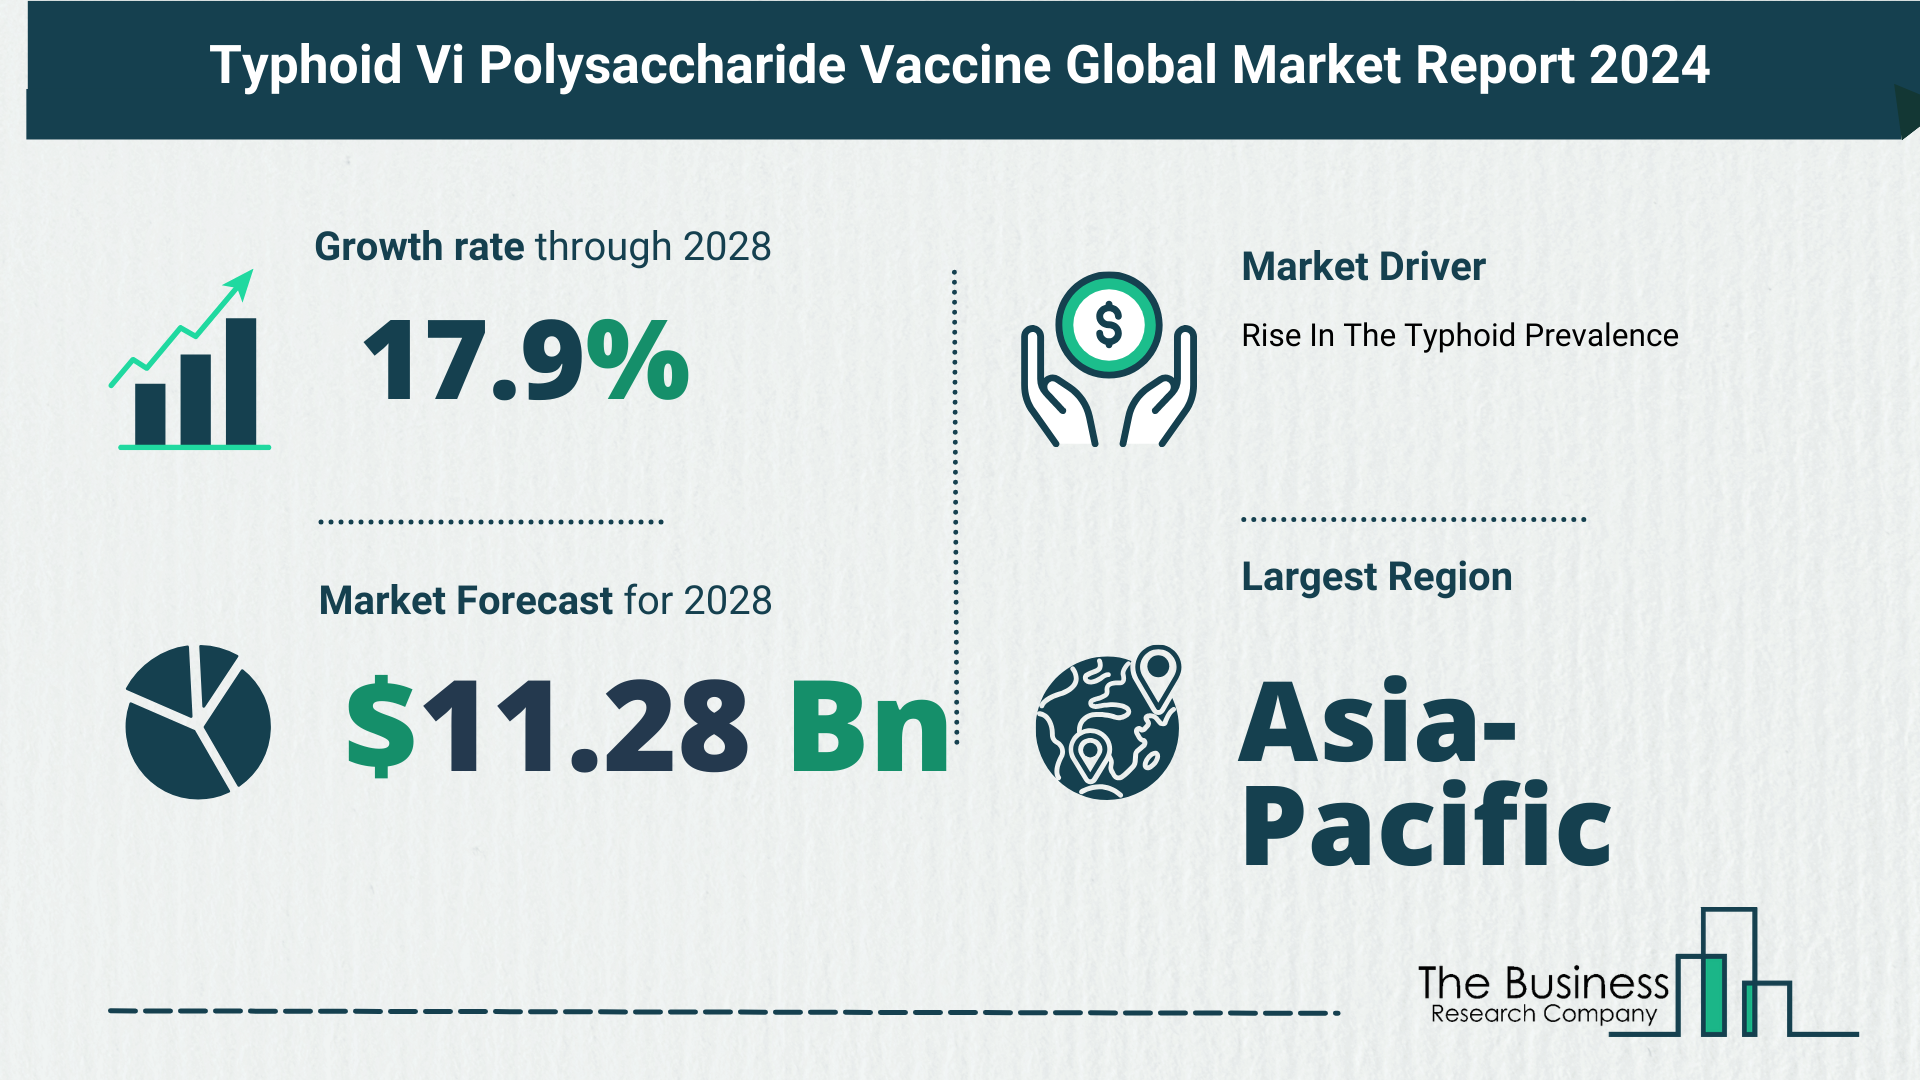 Global Typhoid Vi Polysaccharide Vaccine Market